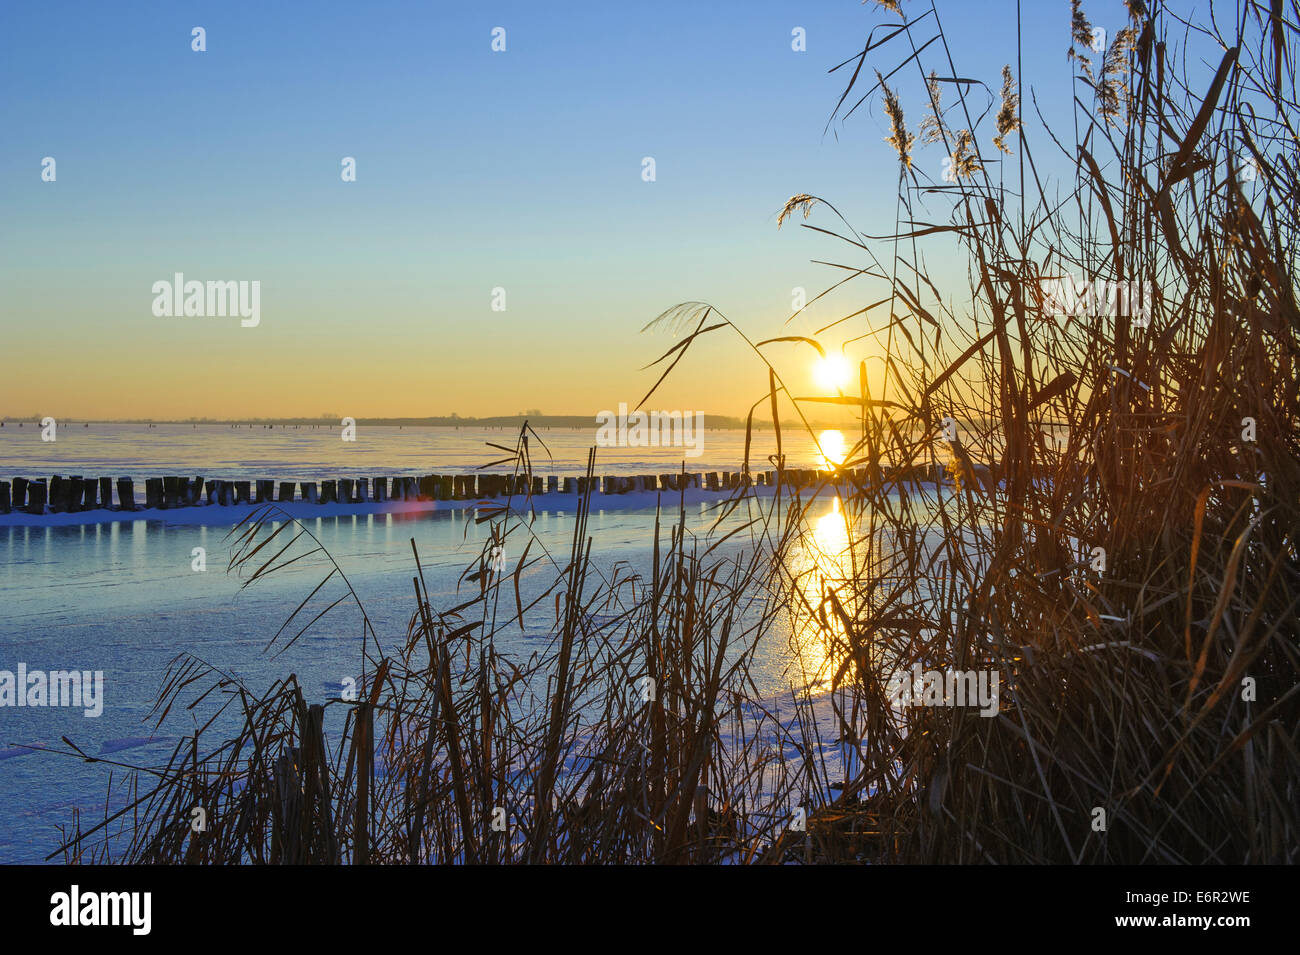 Sera d'inverno sul lago di Dümmer, dümmerlohhausen, distretto di Diepholz, Bassa Sassonia, Germania Foto Stock